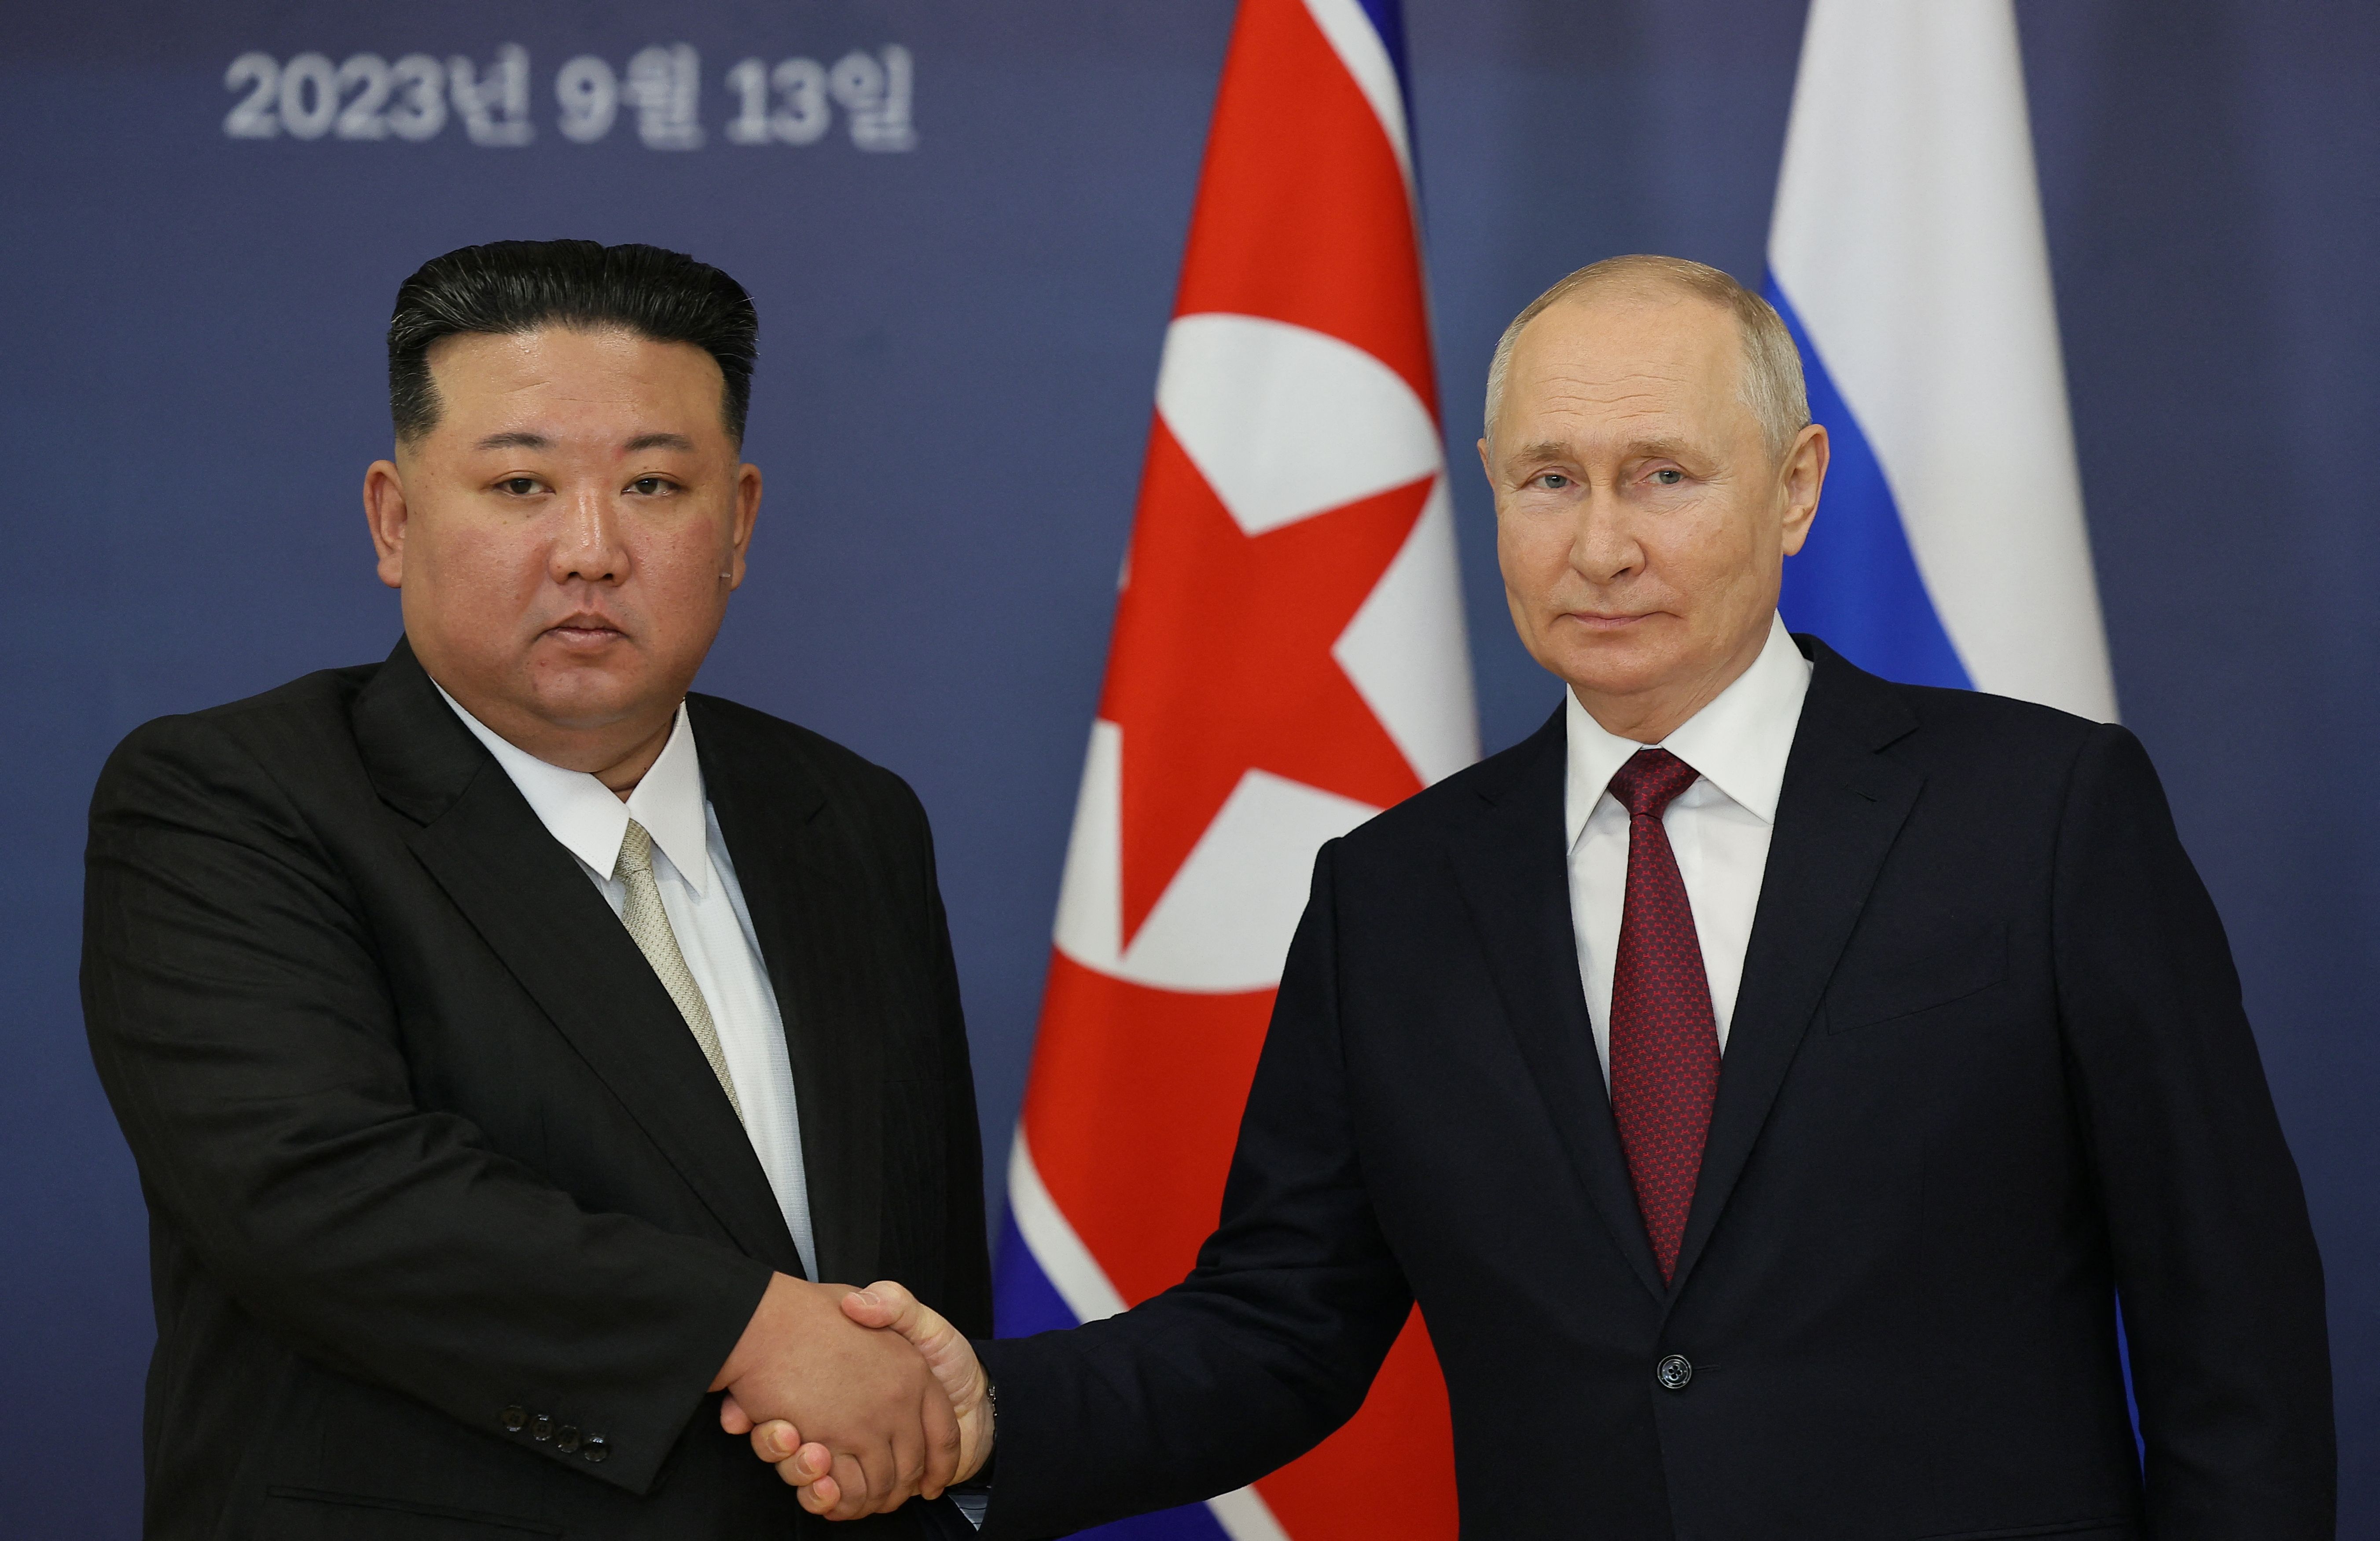 Vladimir Putin, right, and Kim Jong Un in September 2023.